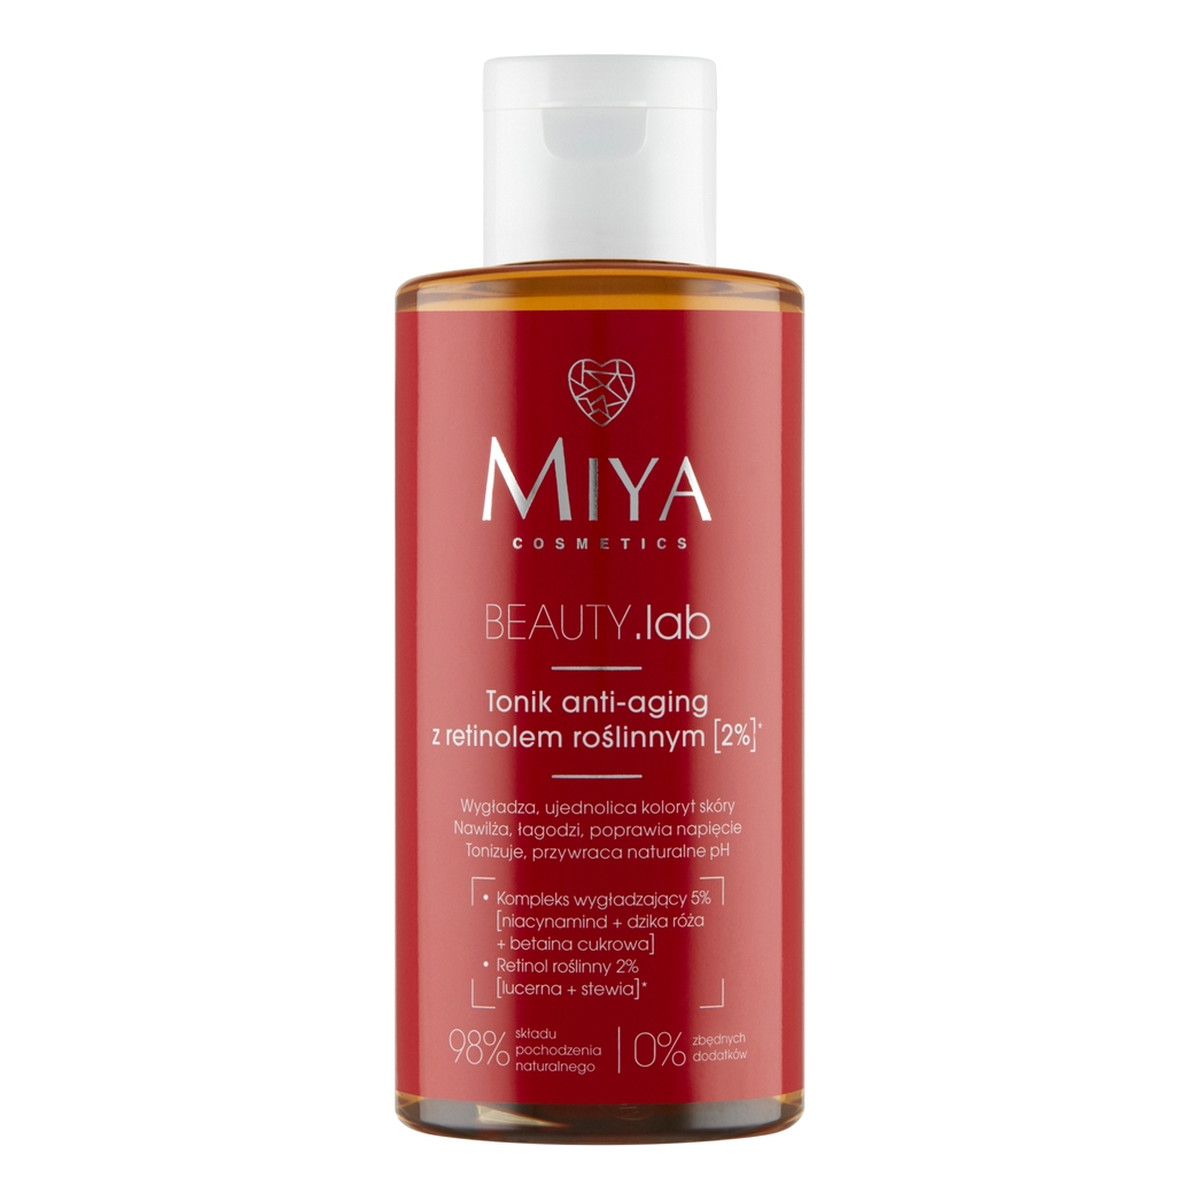 Miya Cosmetics Beauty.lab tonik anti-aging z retinolem roślinnym 2% 150ml